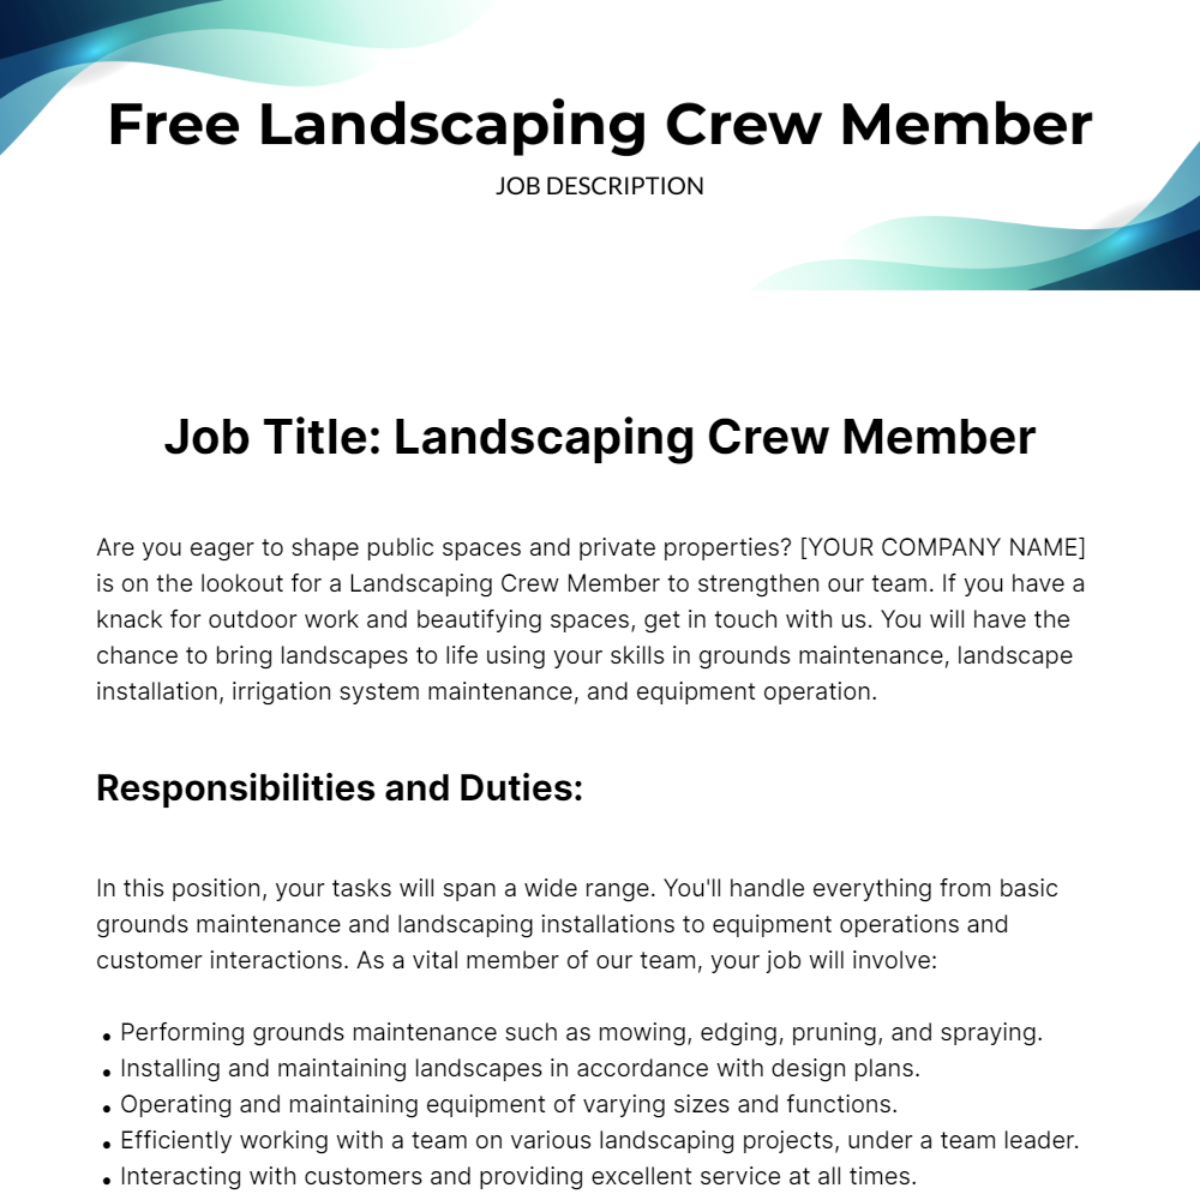 Free Landscaping Crew Member Job Description Template